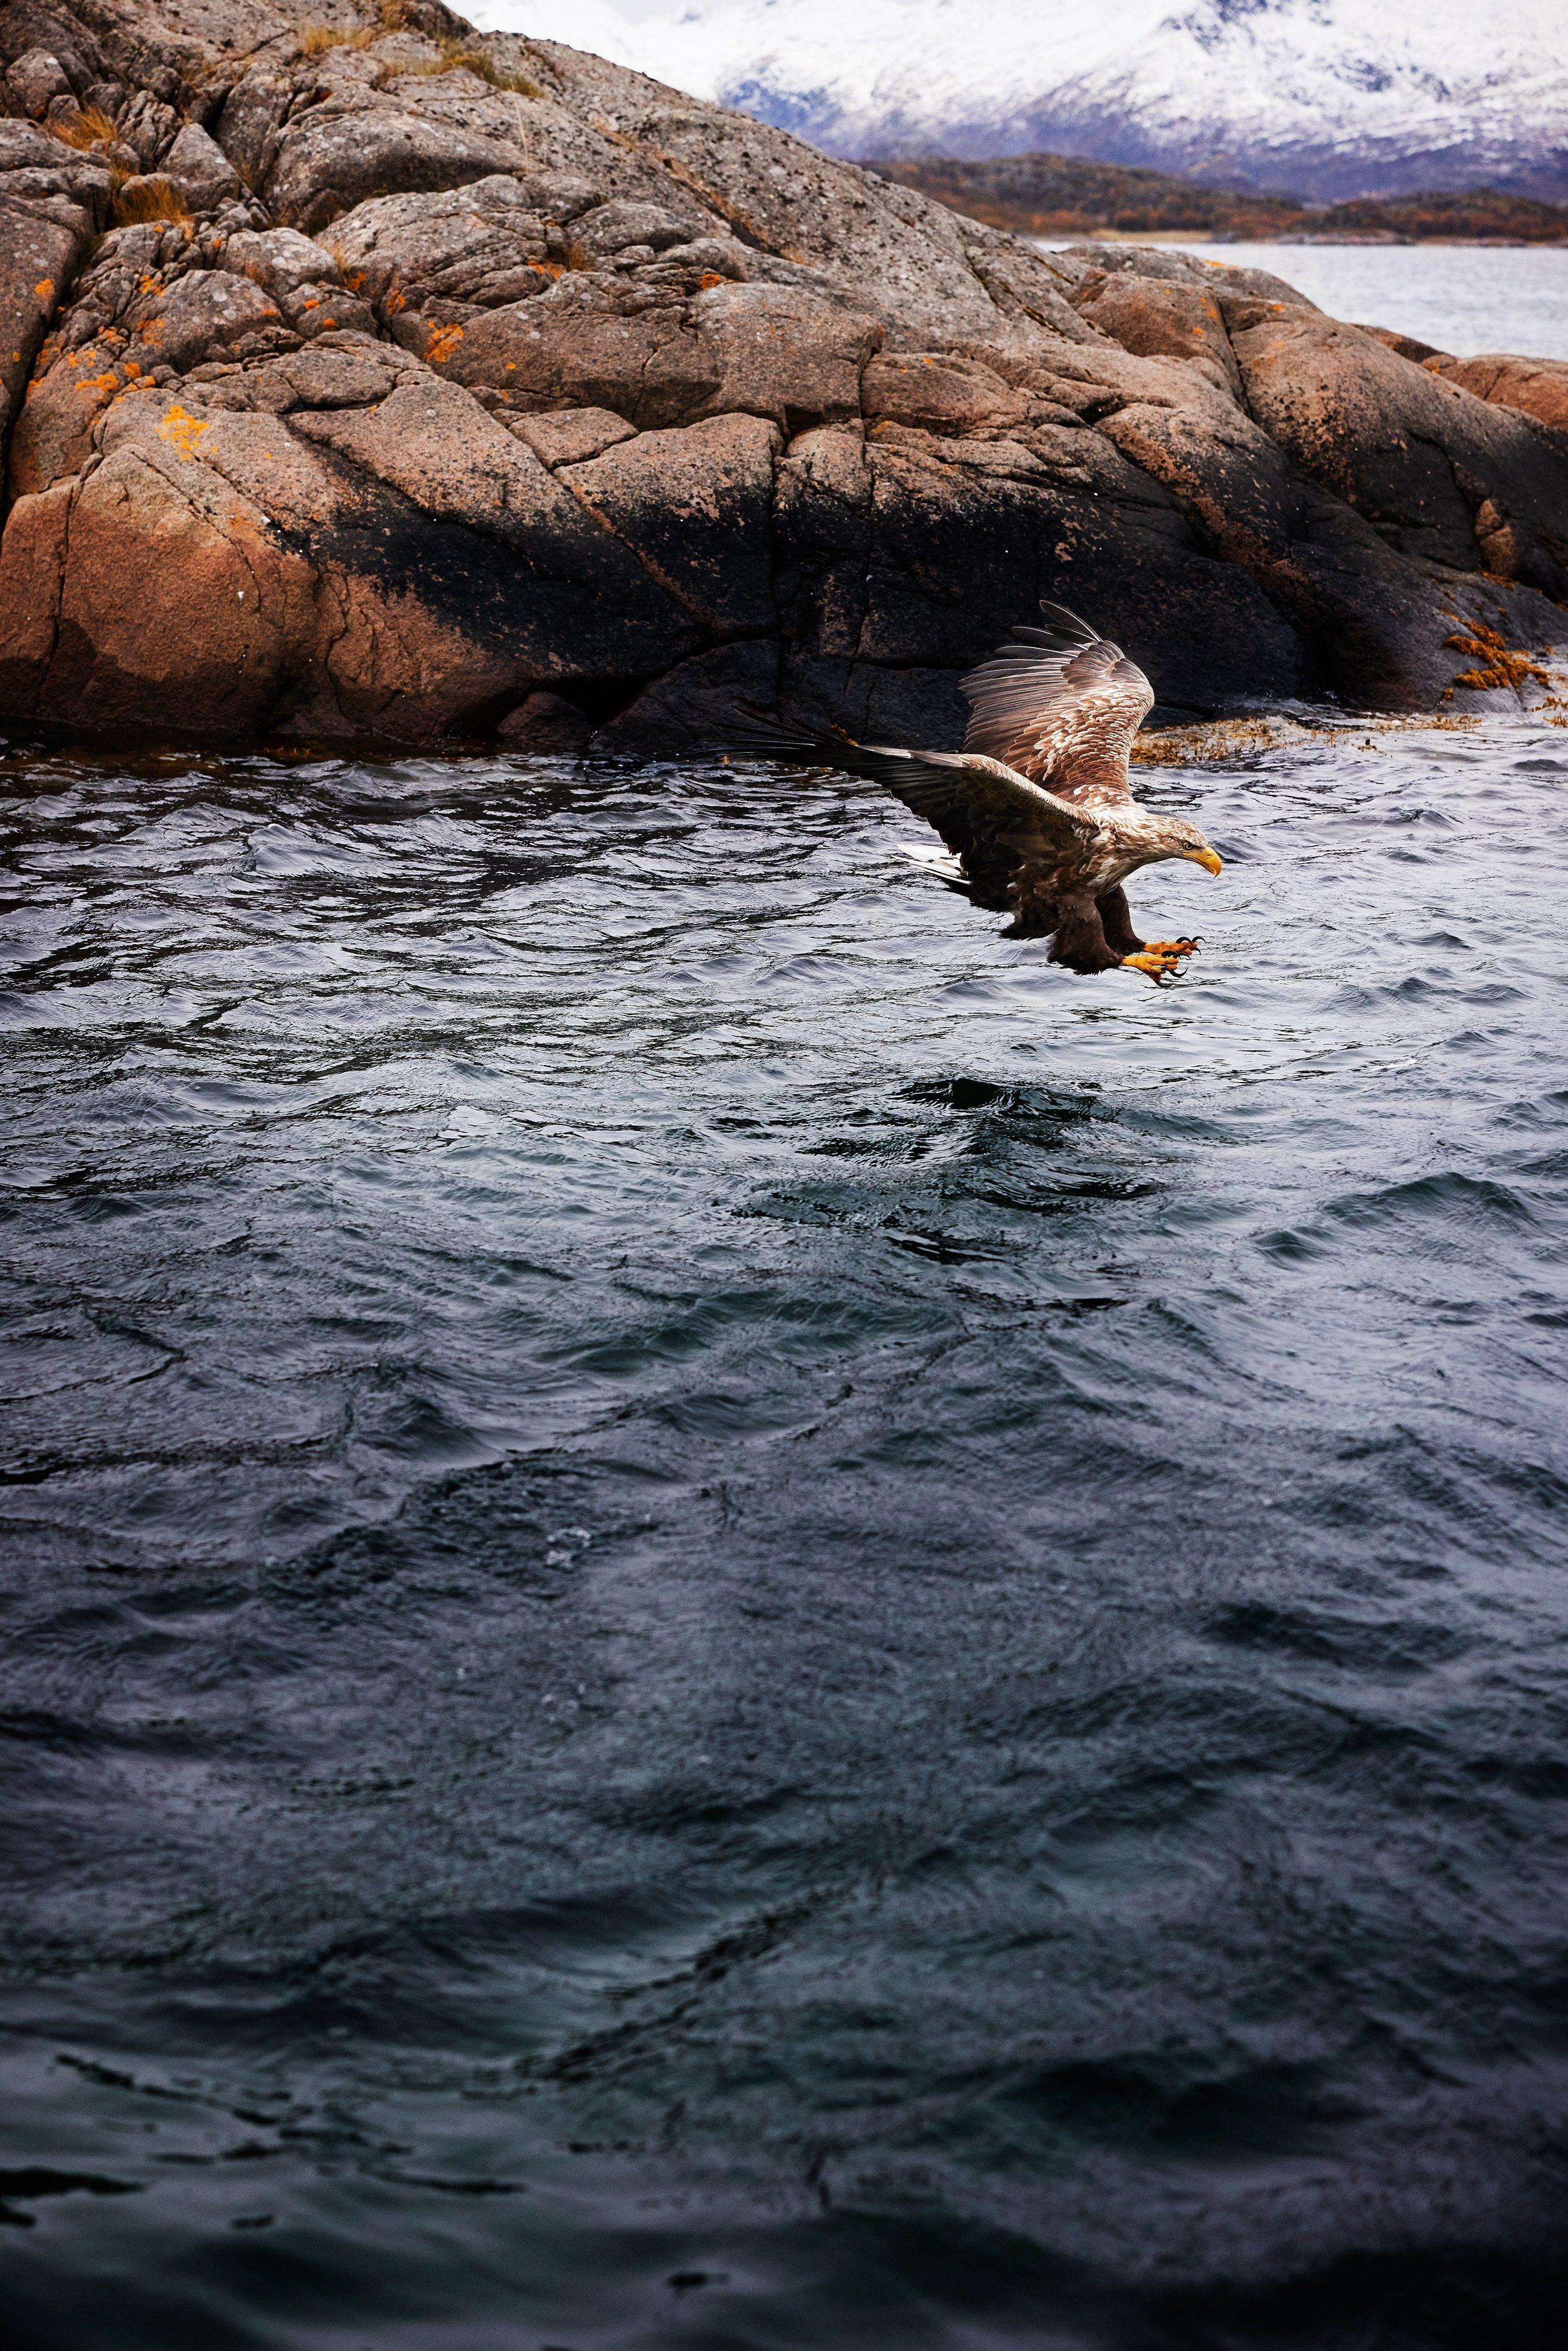 A sea eagle landing on water